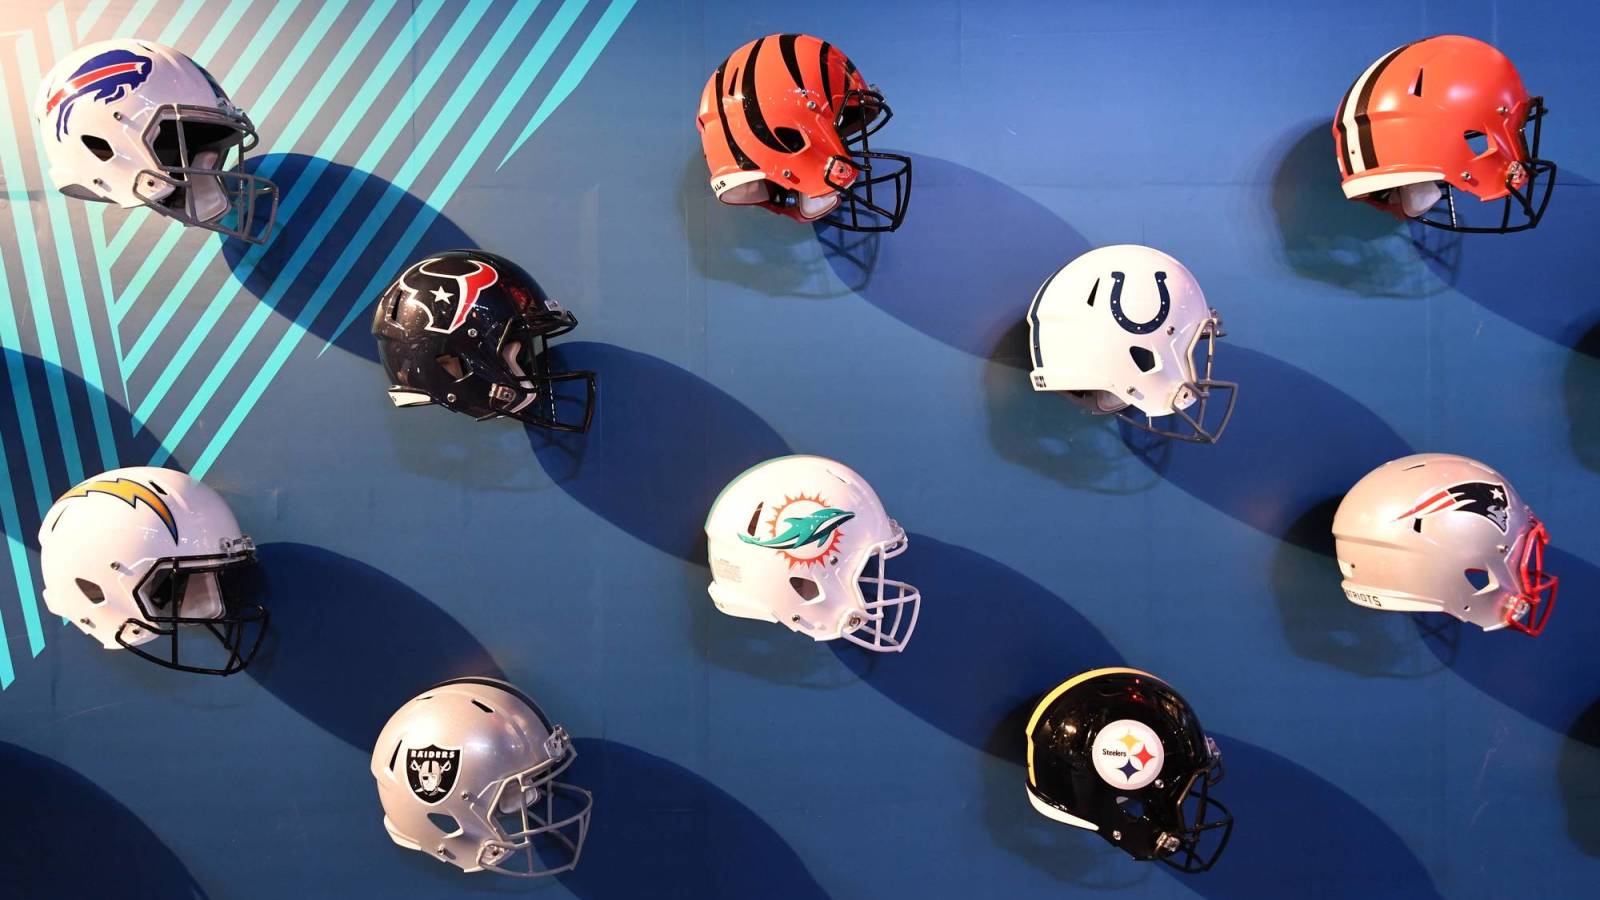 NFL 2023: New Uniforms, Helmets for 13 Teams